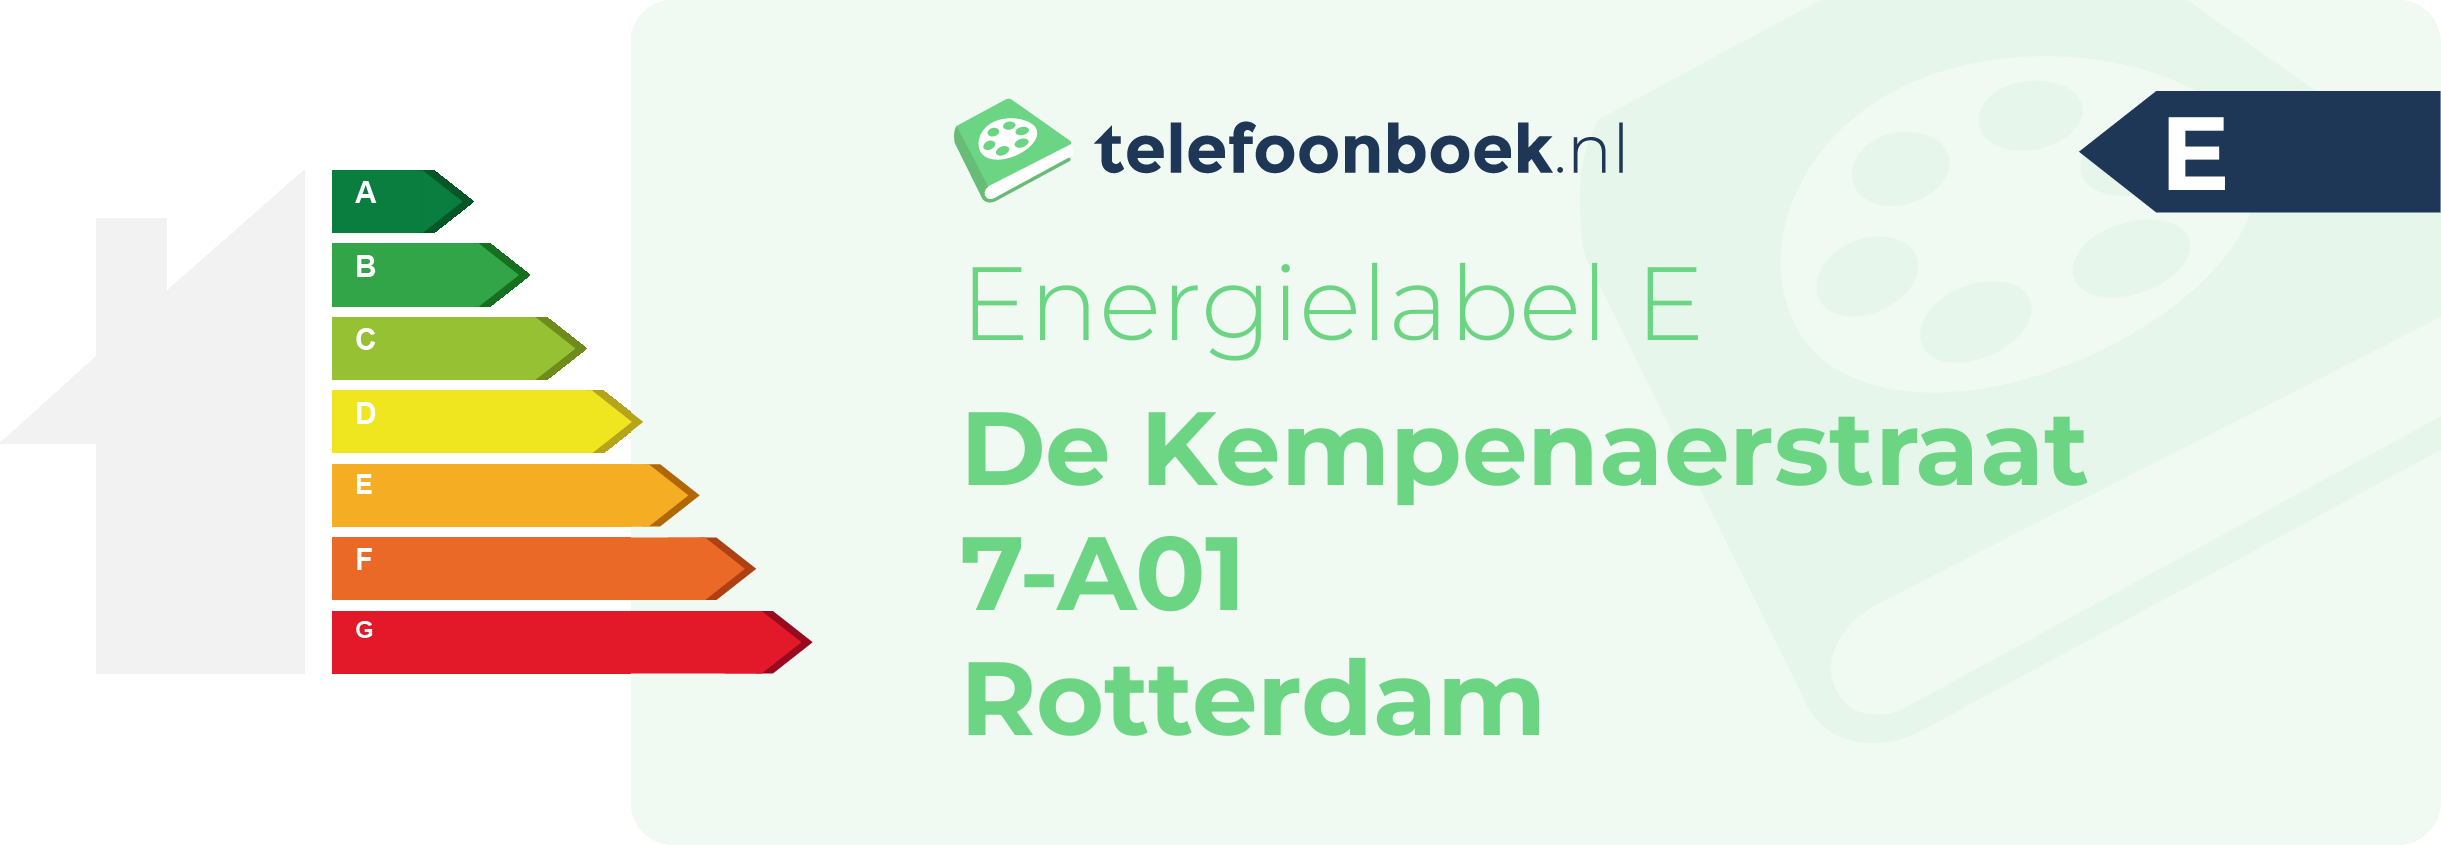 Energielabel De Kempenaerstraat 7-A01 Rotterdam